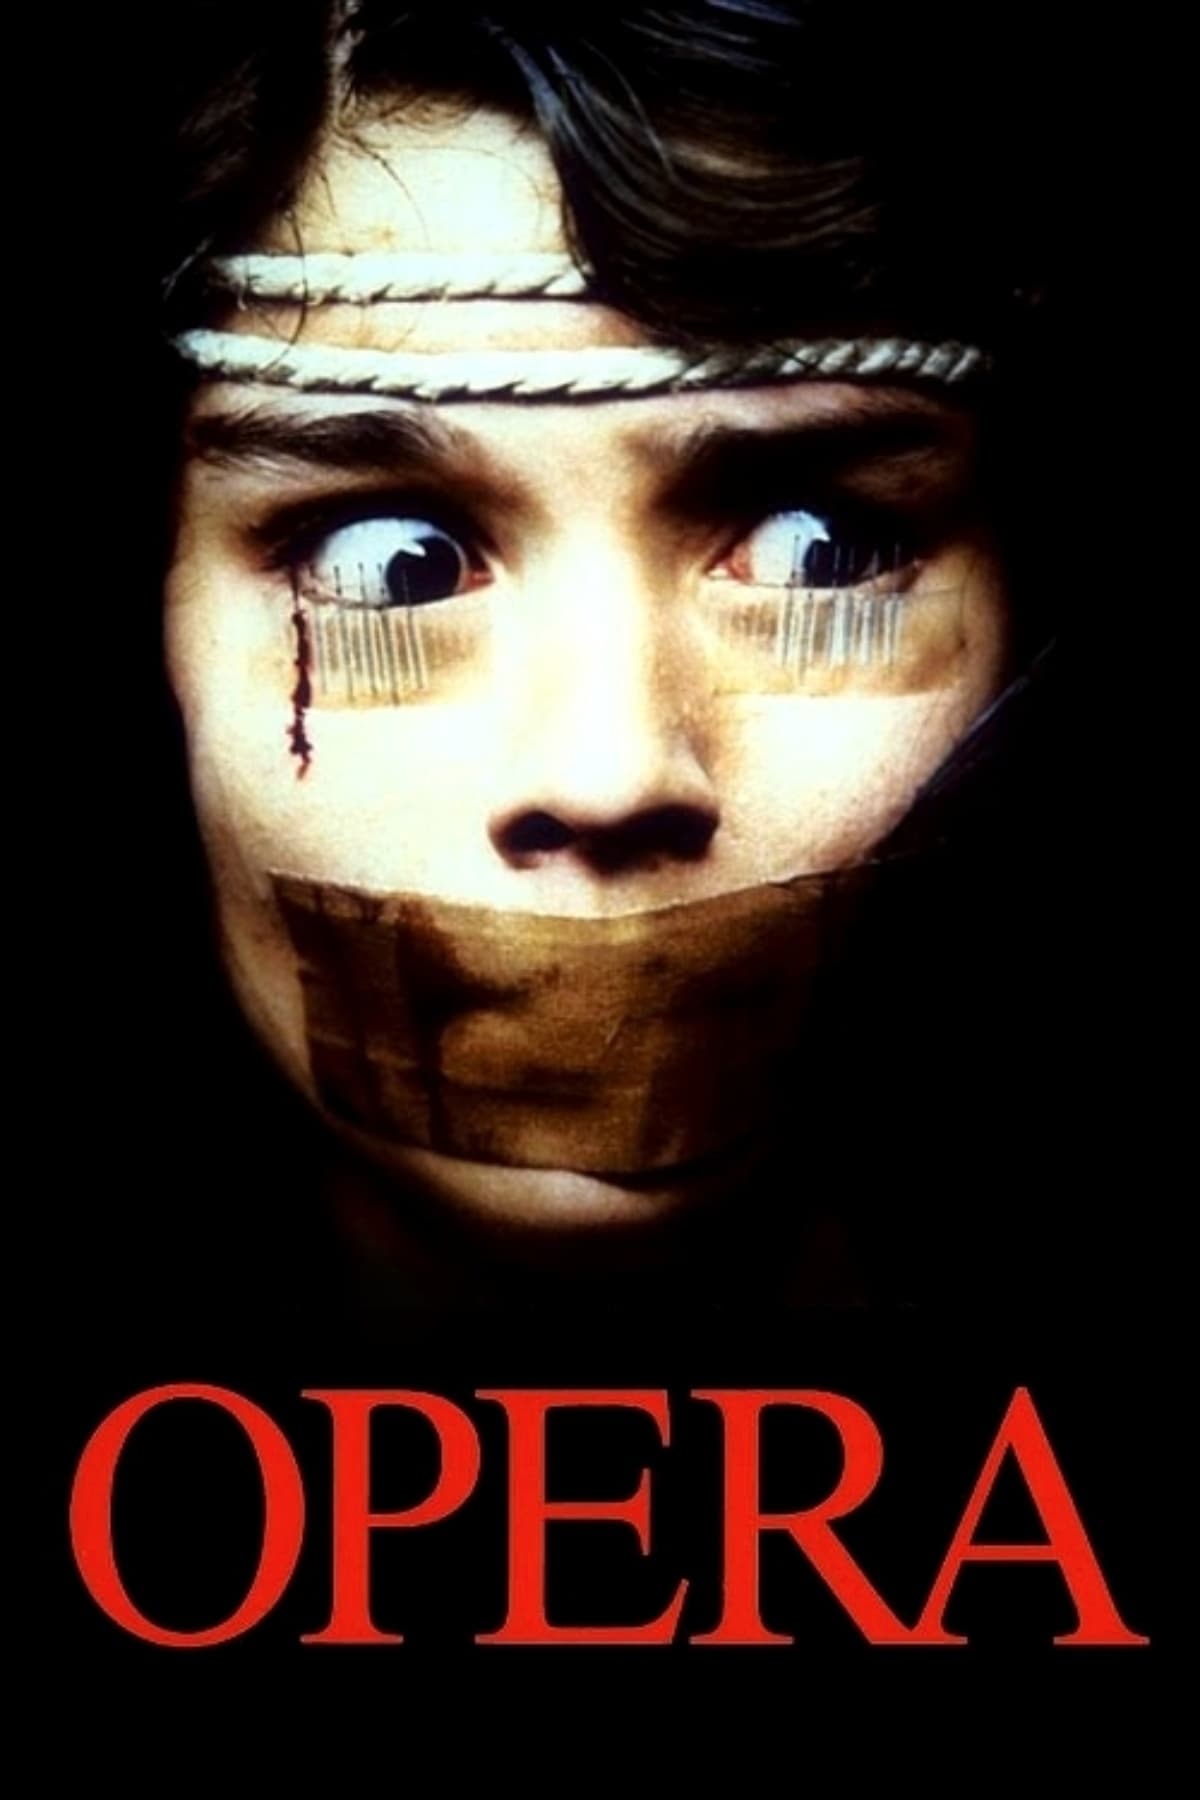 Terreur à l'opéra